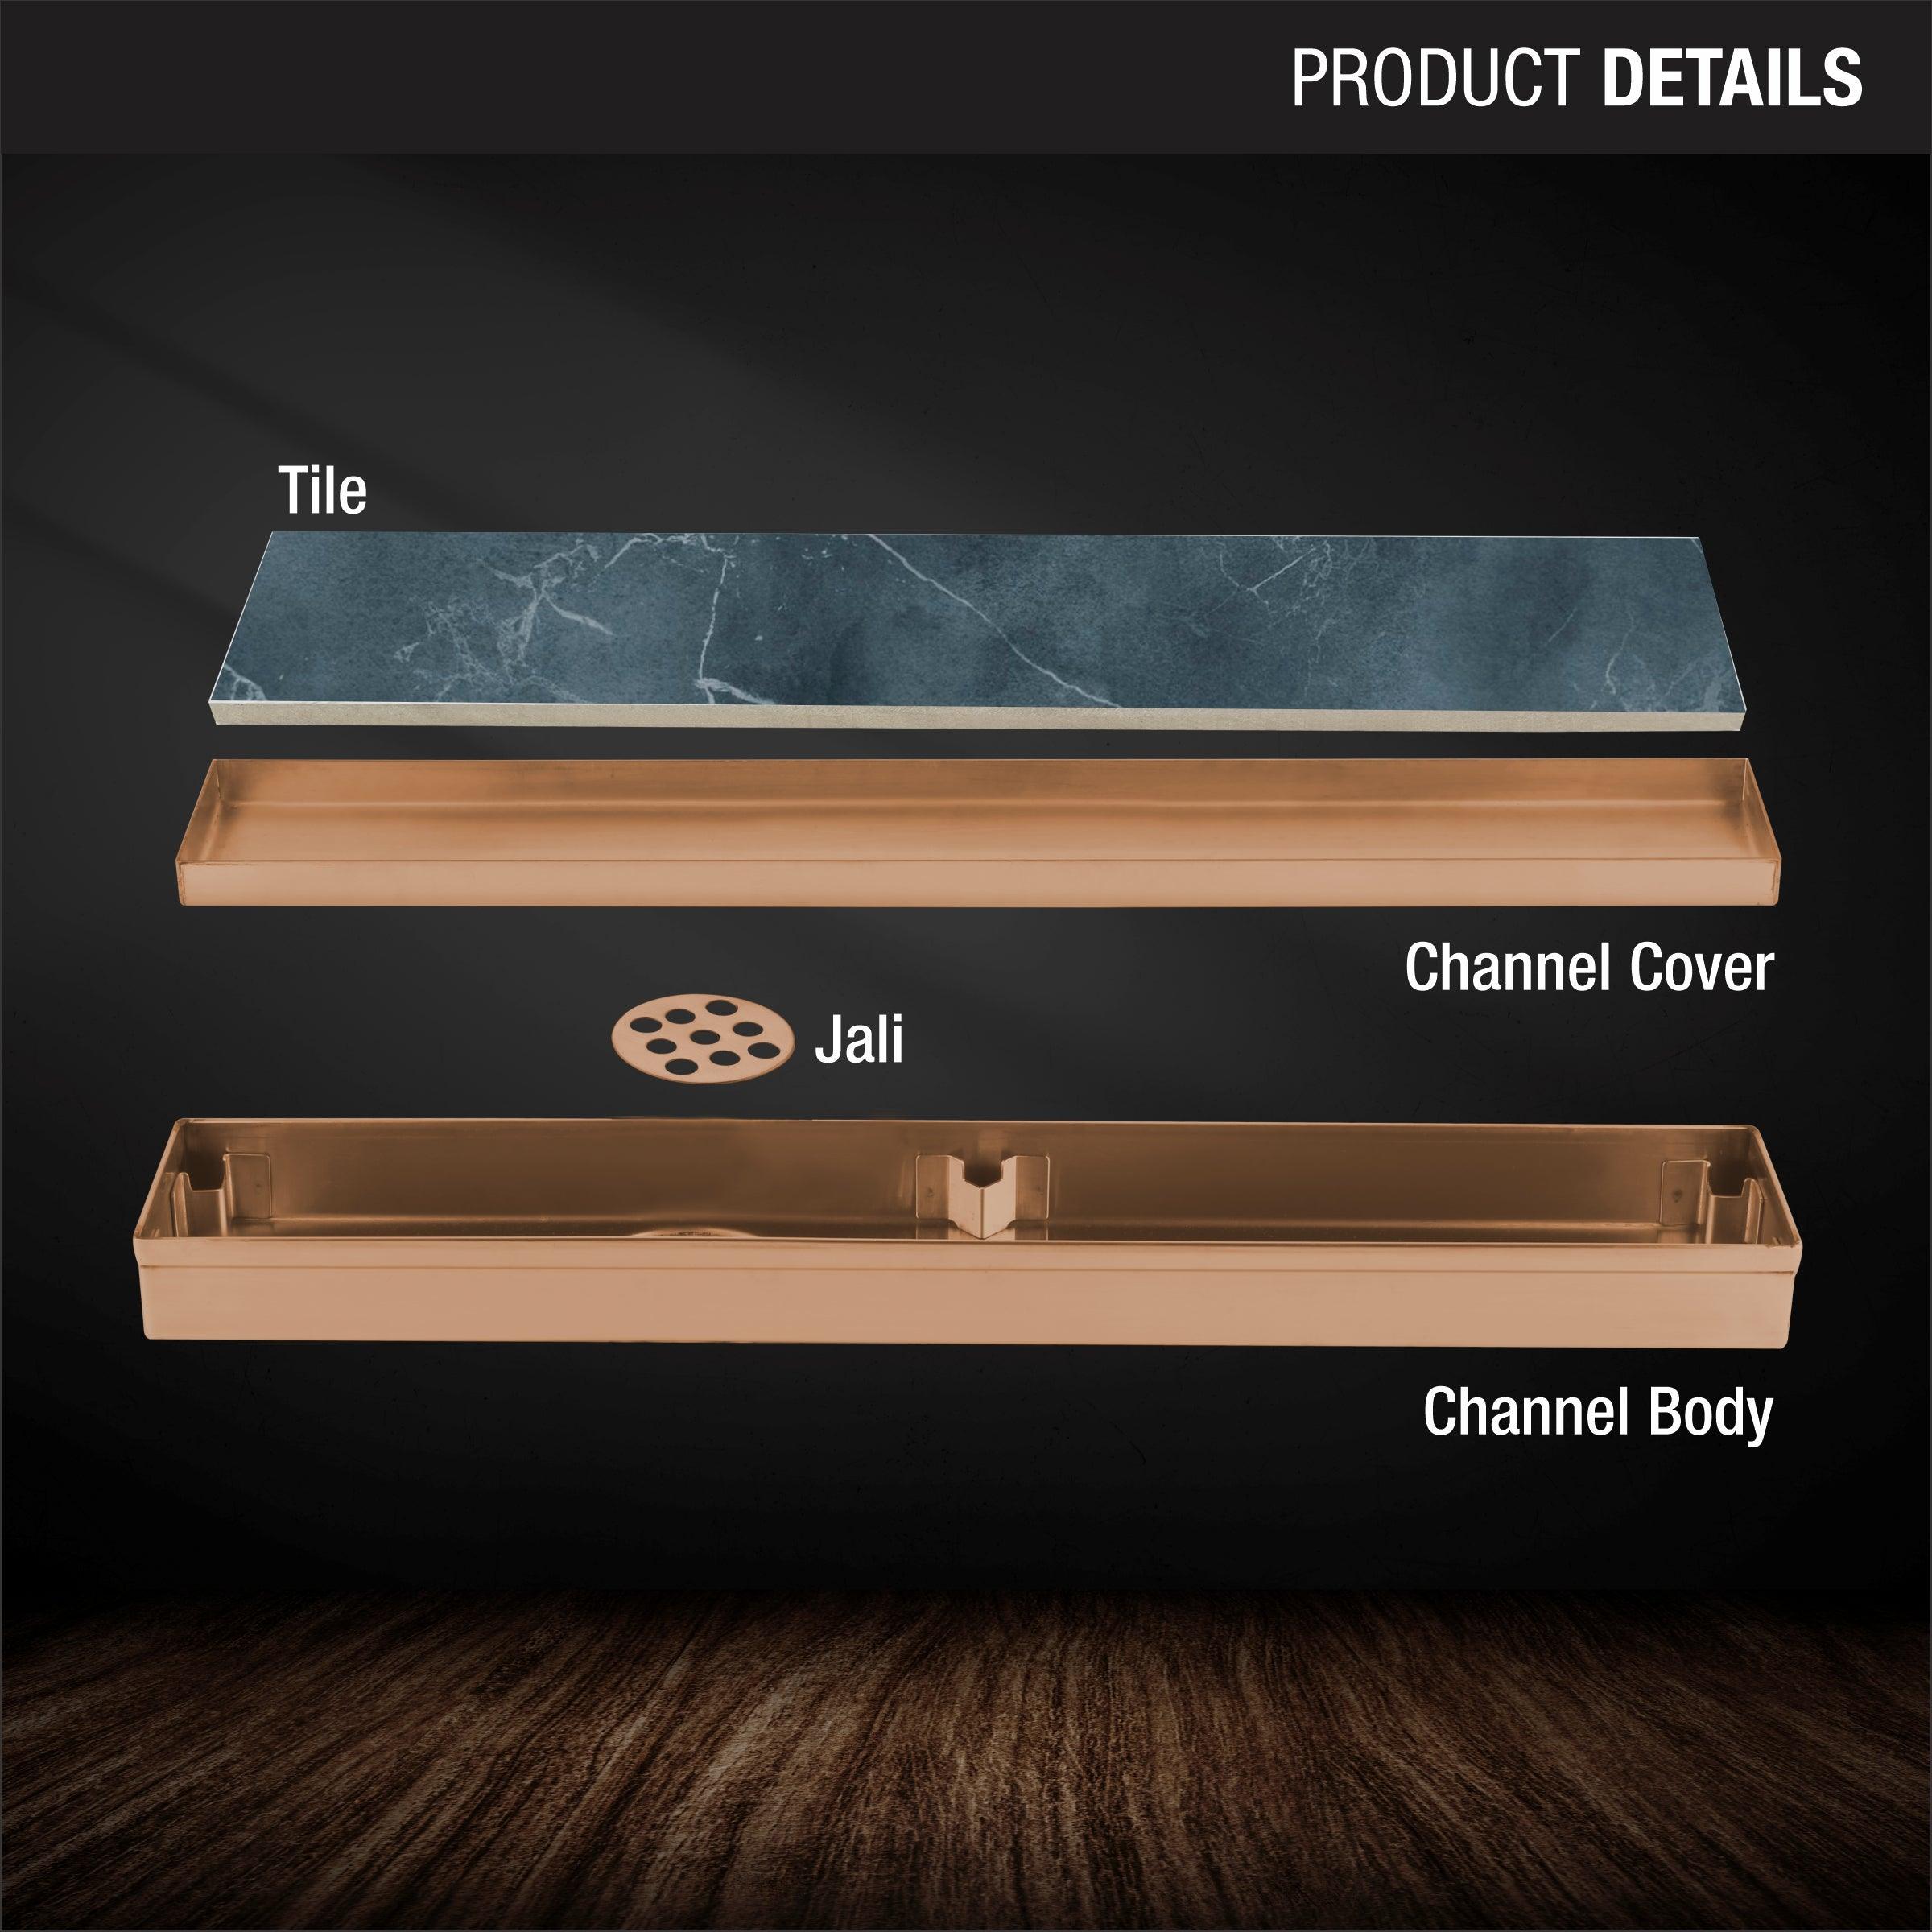 Tile Insert Shower Drain Channel - Antique Copper (18 x 2 Inches) product details